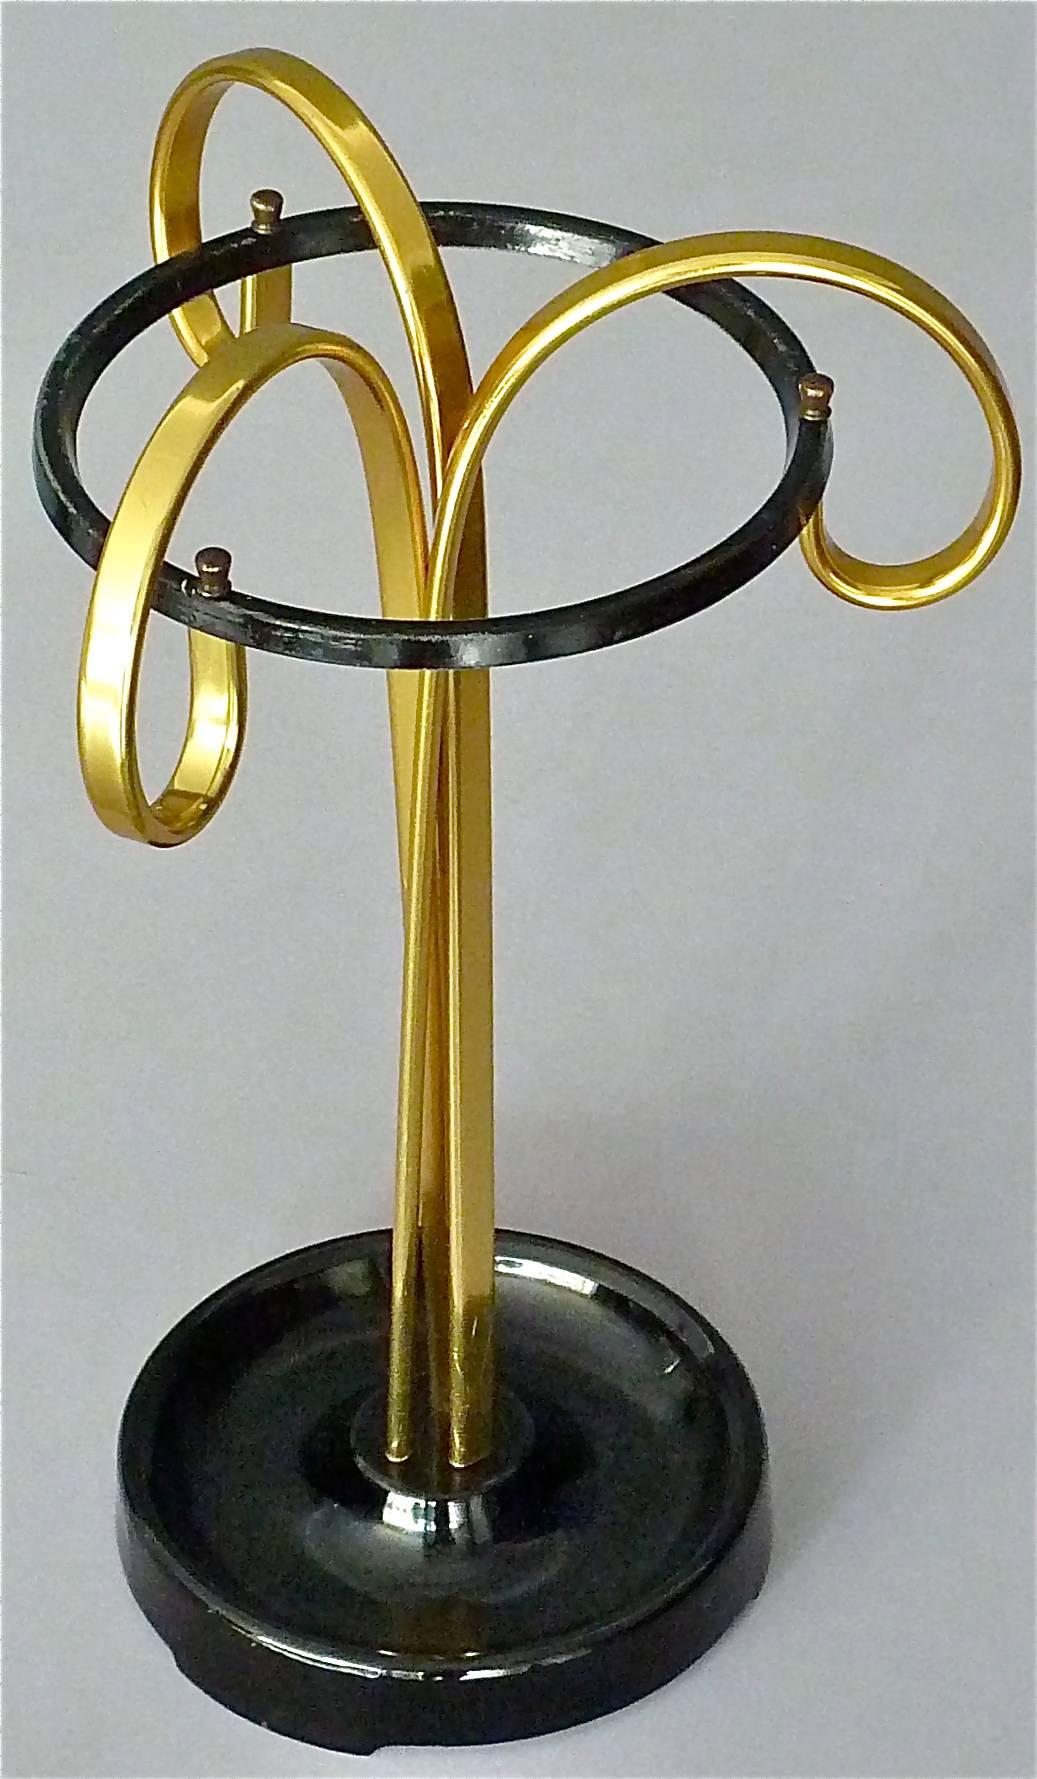 Sculptural 1950s Midcentury Umbrella Stand Golden Anodized Aluminum Black Iron For Sale 4